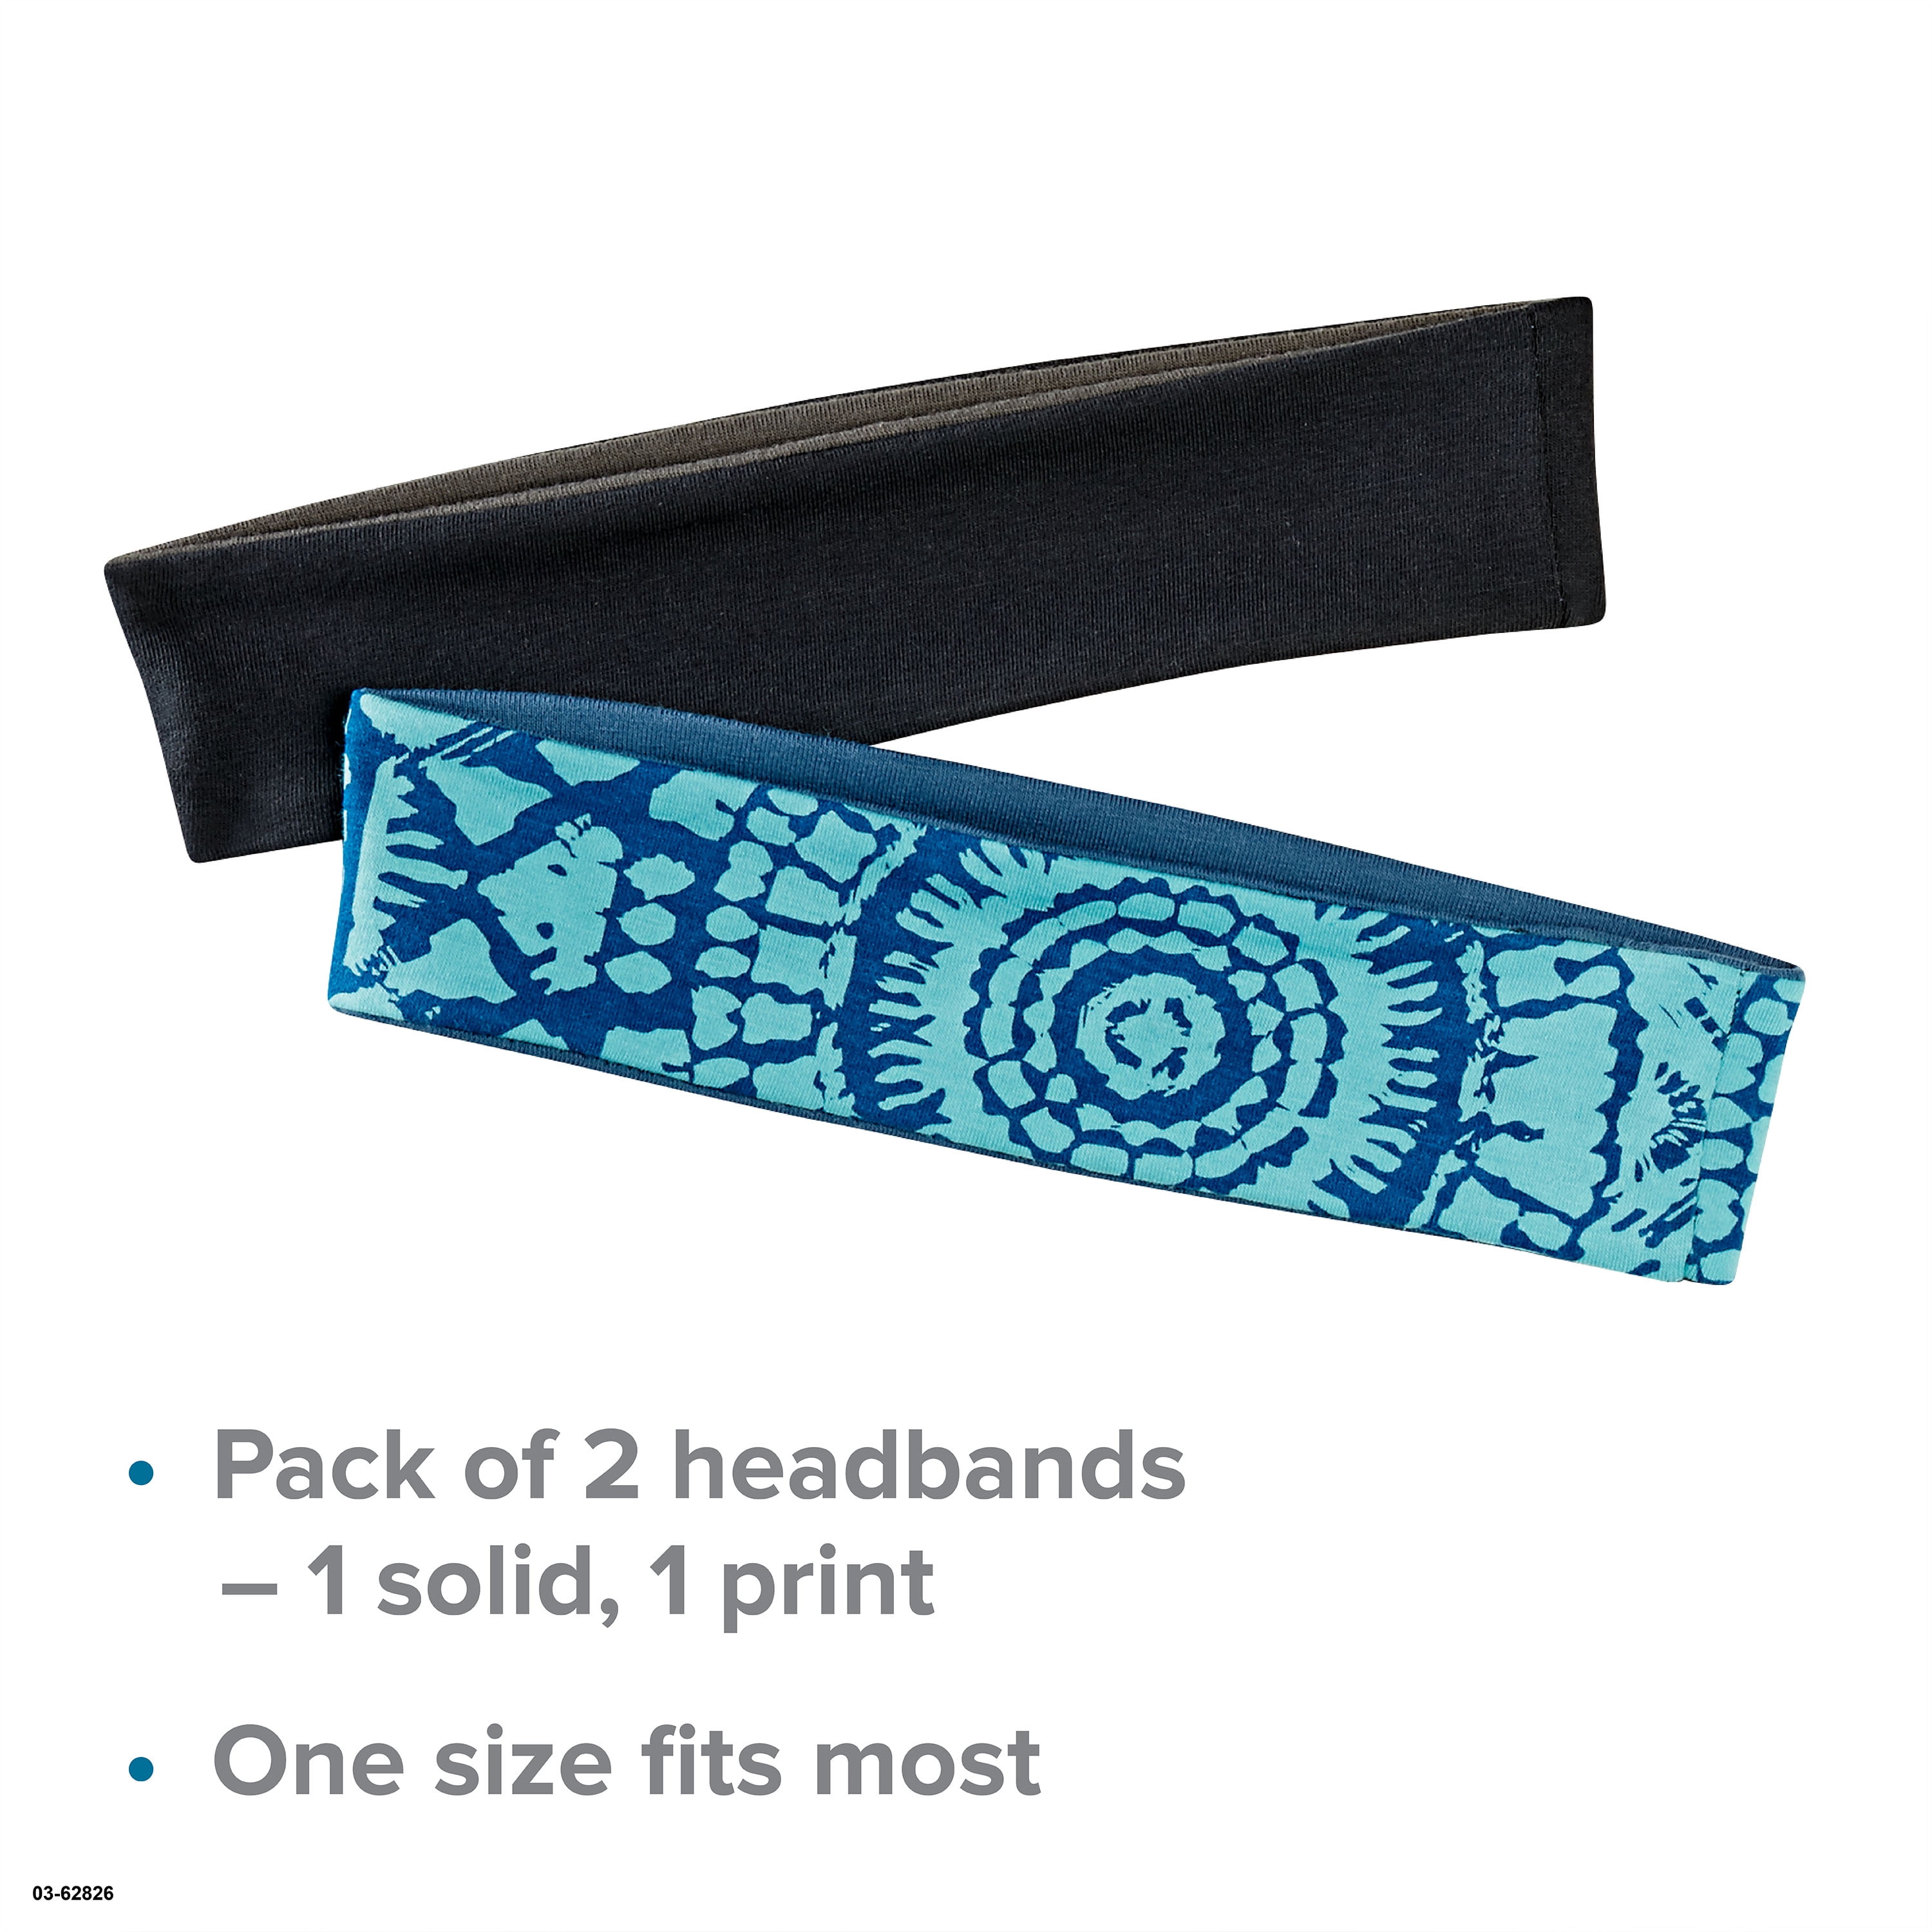 Evolve by Gaiam Yoga Headband Set, Blue and Black, 2 Pack, Sports Sweatbands